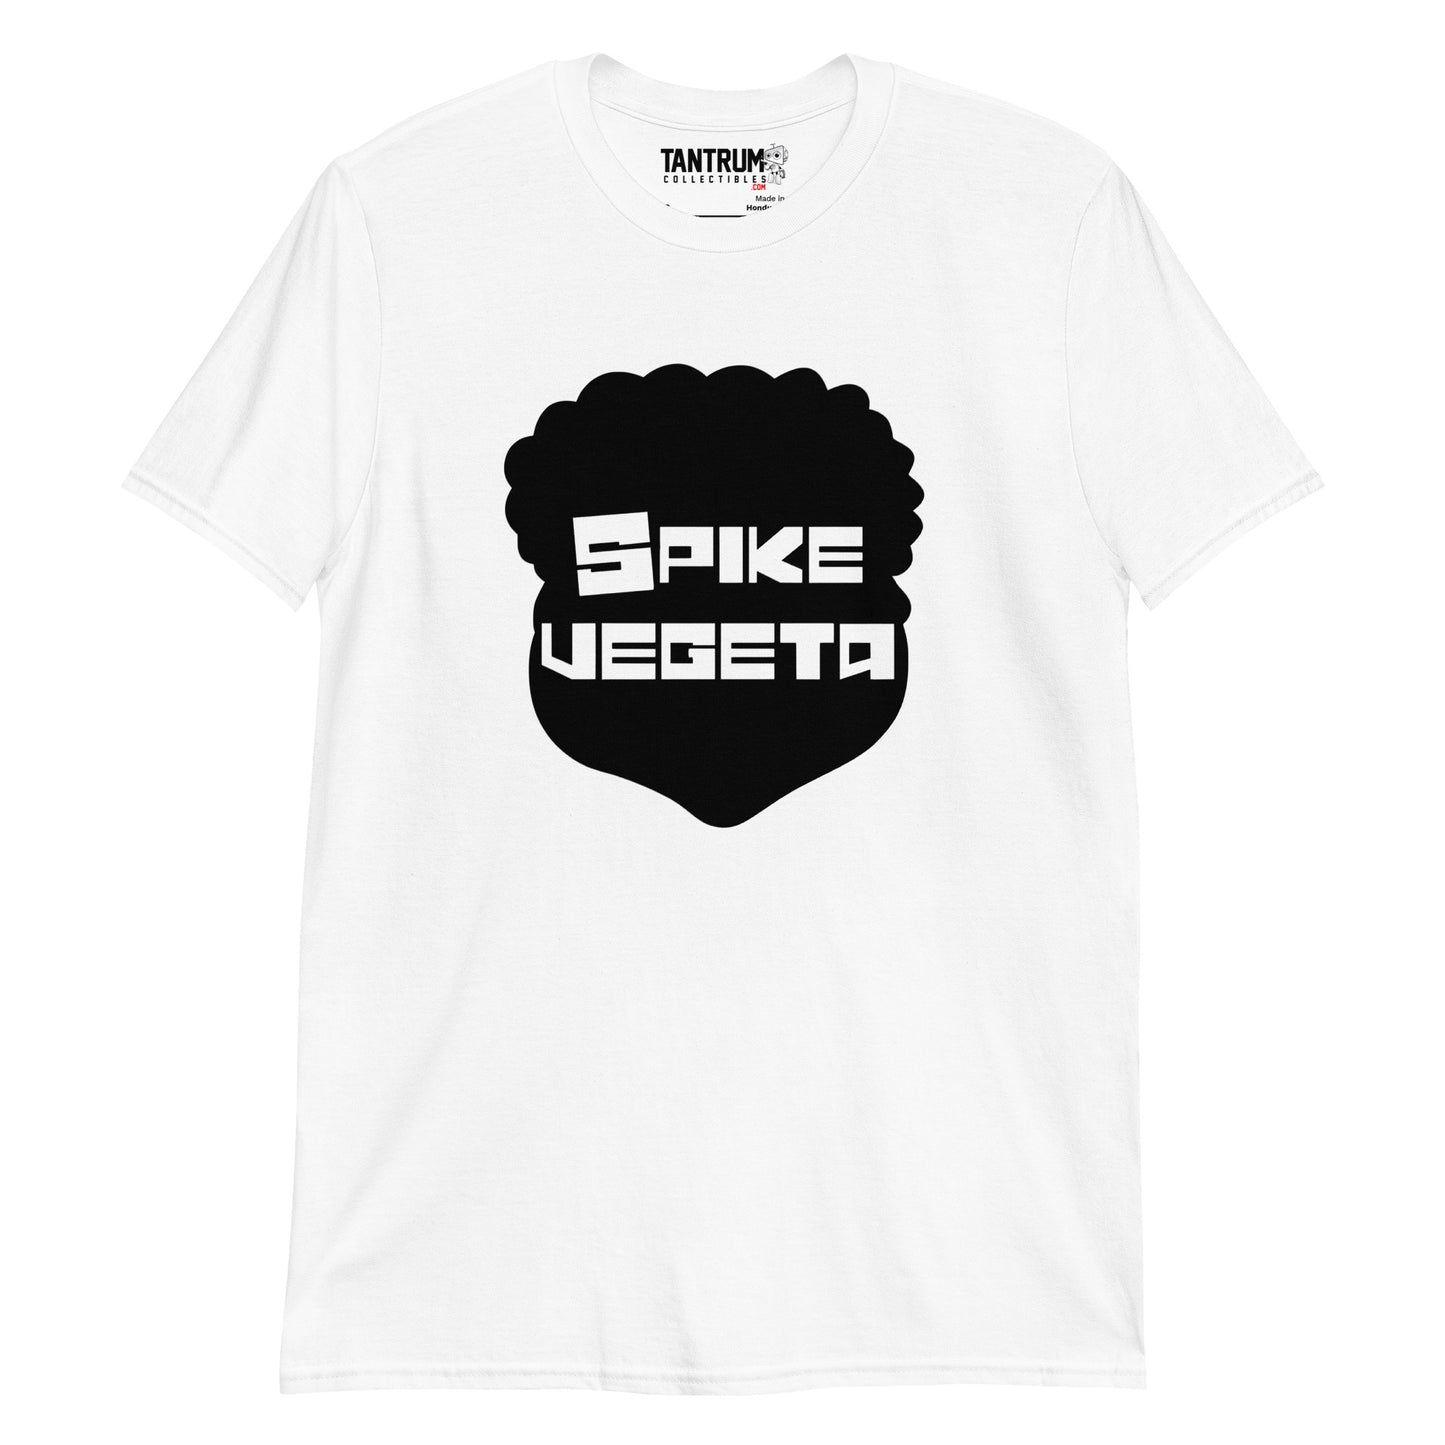 SpikeVegeta - Unisex T-Shirt - SpikeVegeta Nut Silhouette